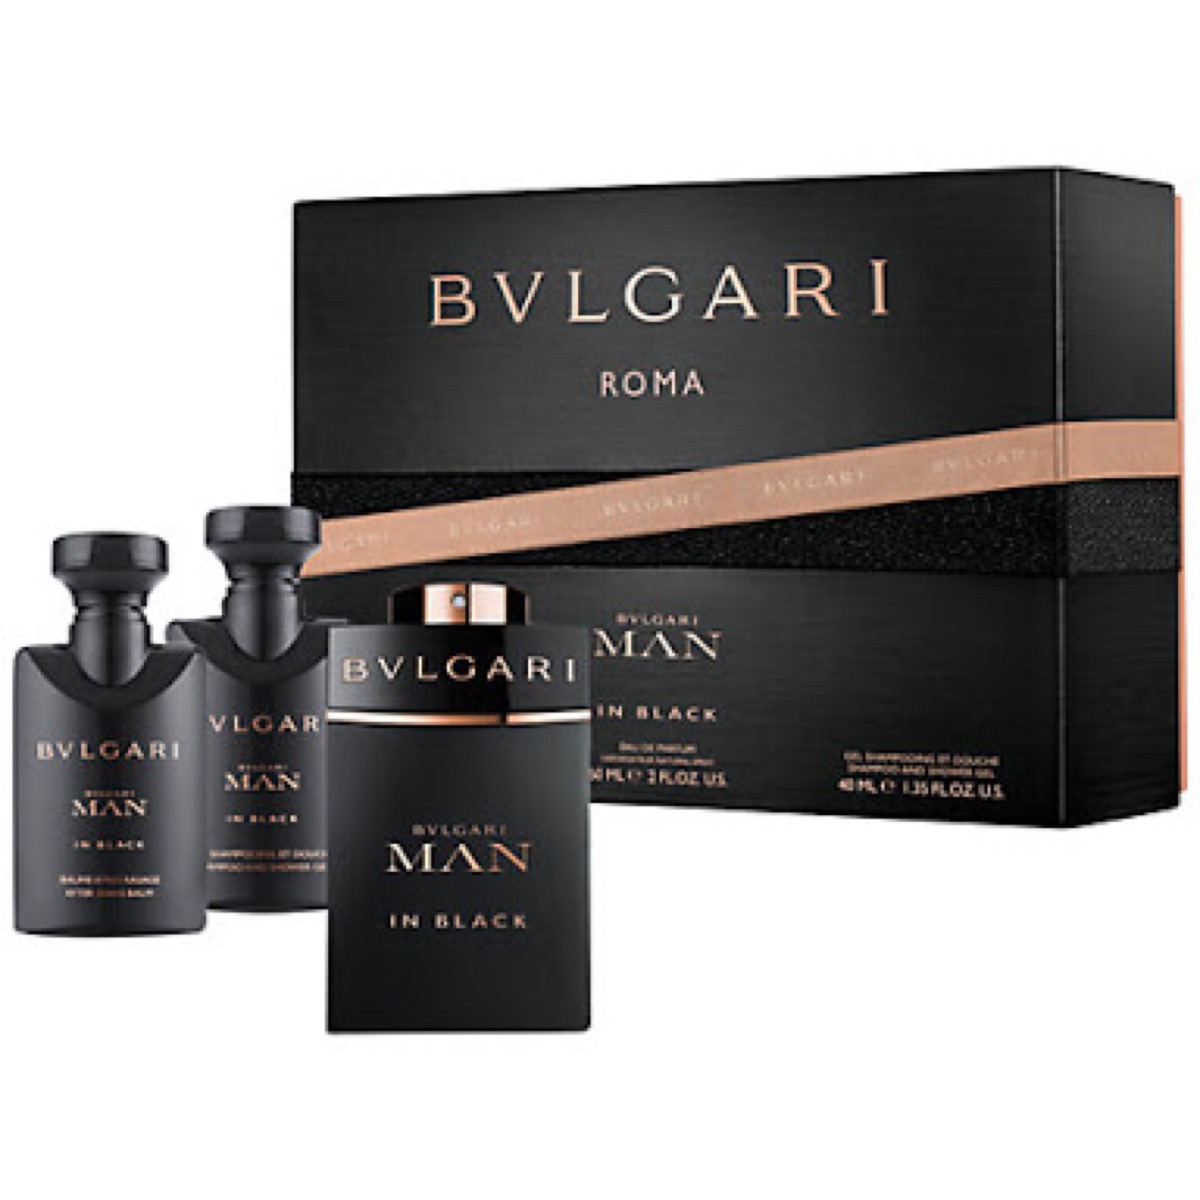 Bulgari Man In Black Roma Kit - R$ 335 